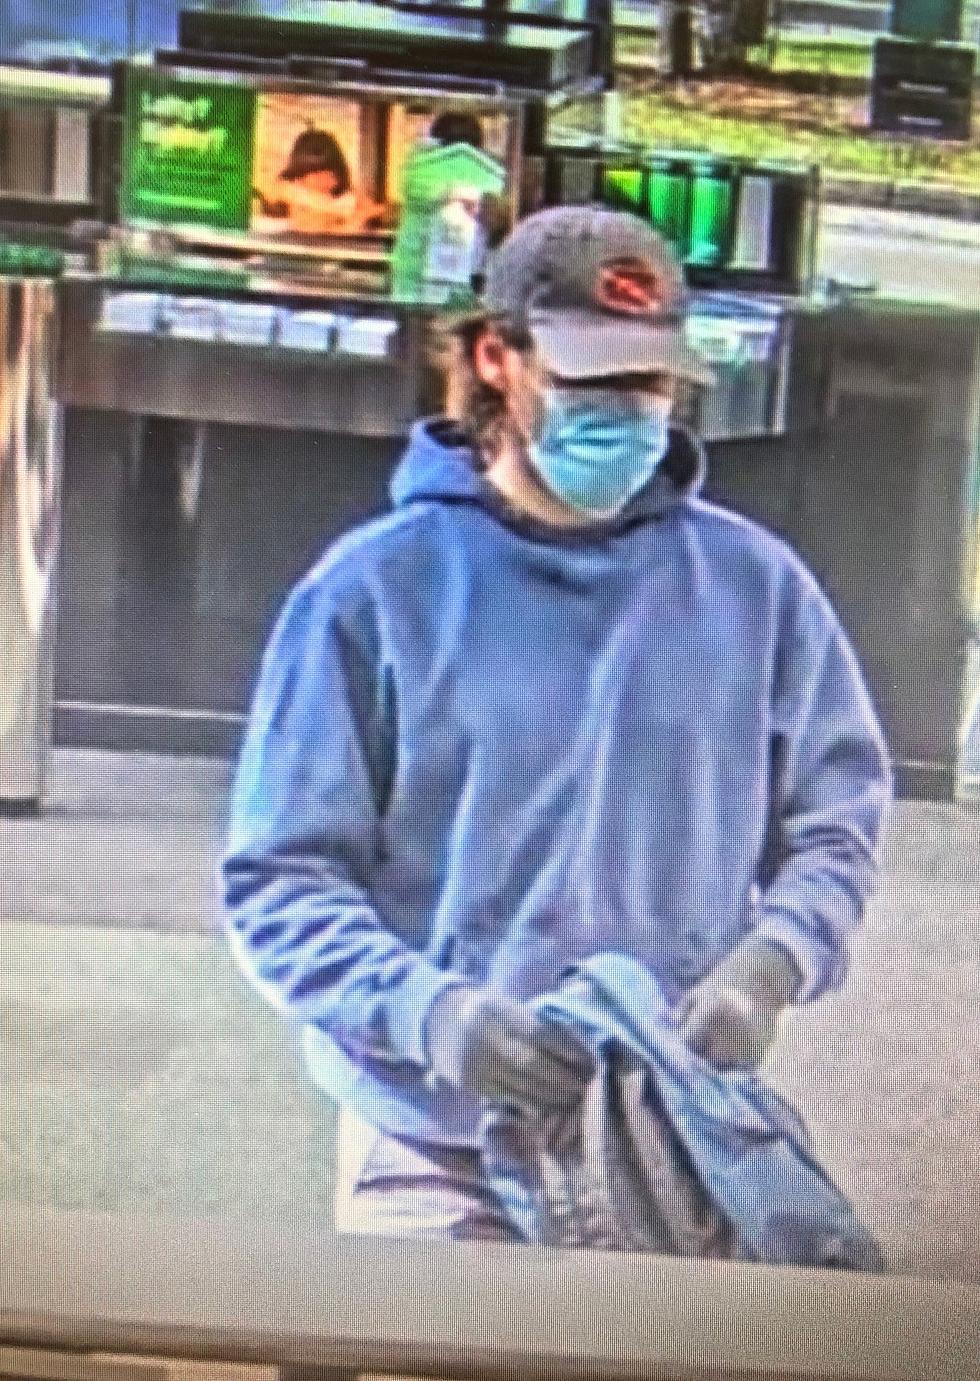 Police in Medford, NJ, Need Help Finding Bank Robber